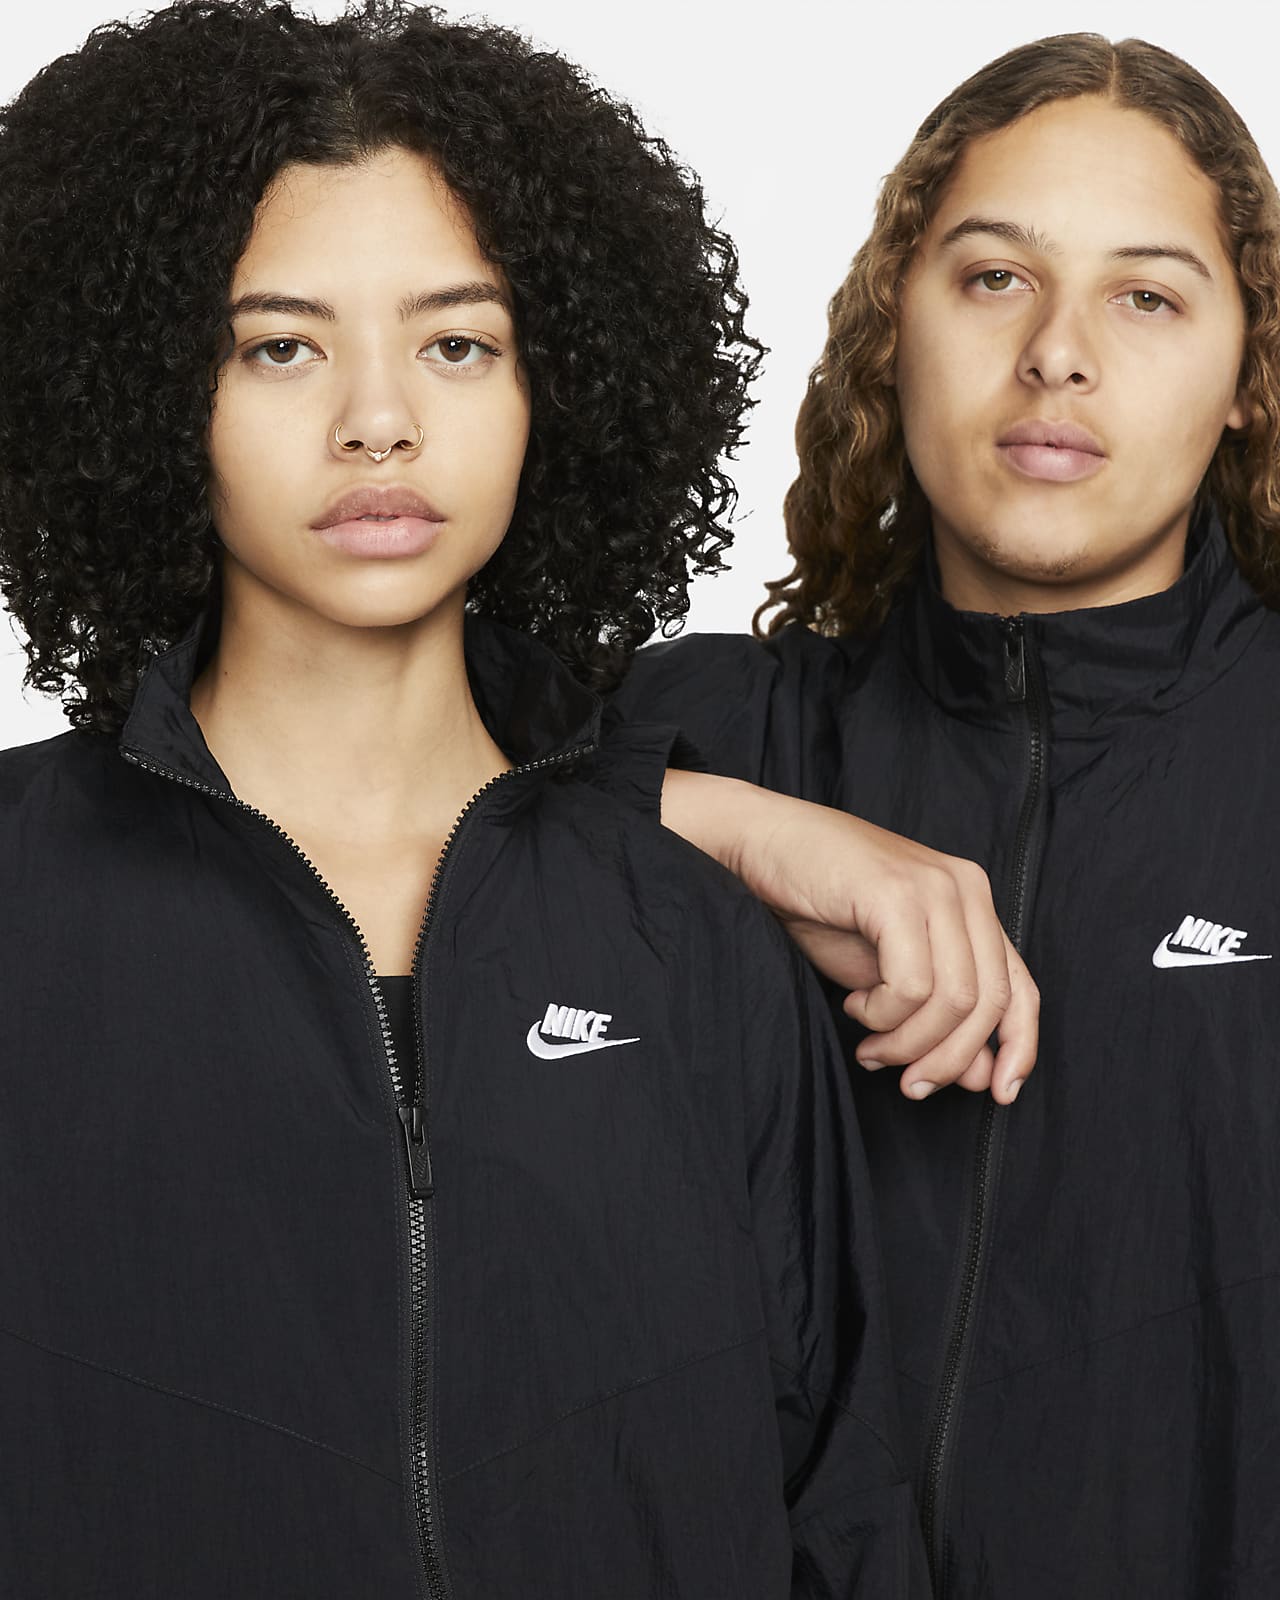 Kurtka damska Nike Sportswear